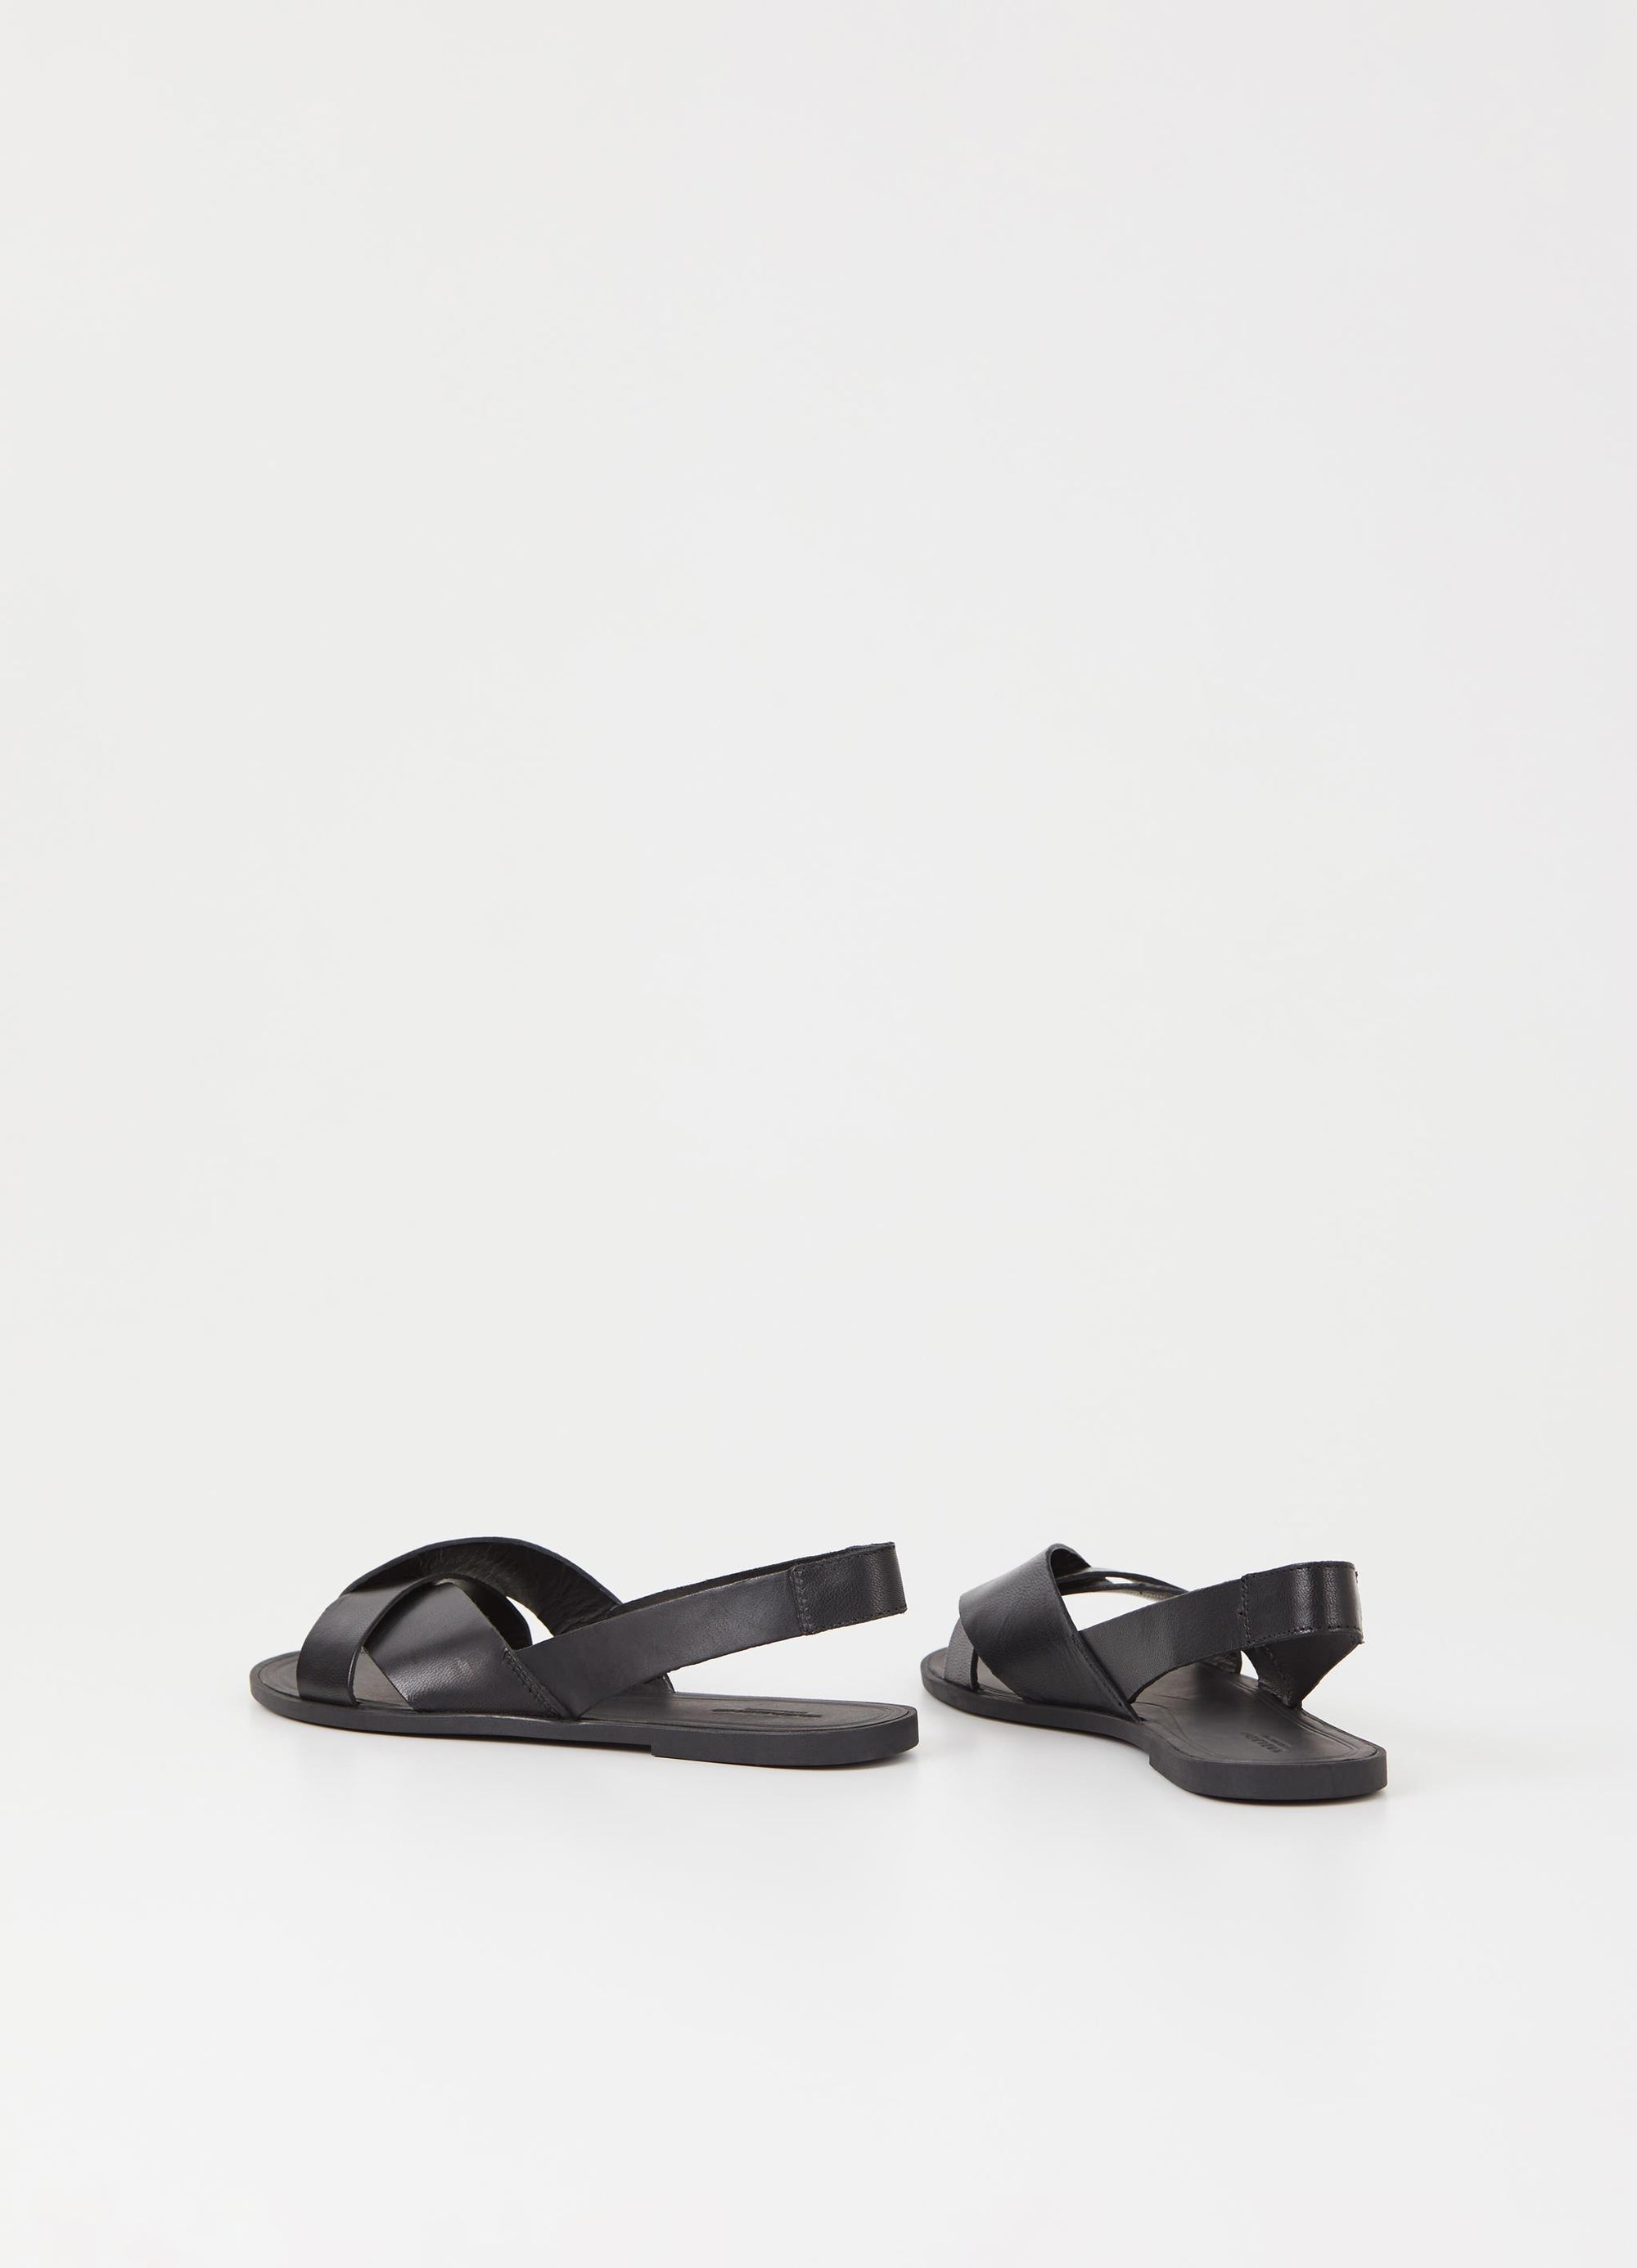 Vagabond Tia 2.0 slingback flat sandal black leather | Pipe and Row ...